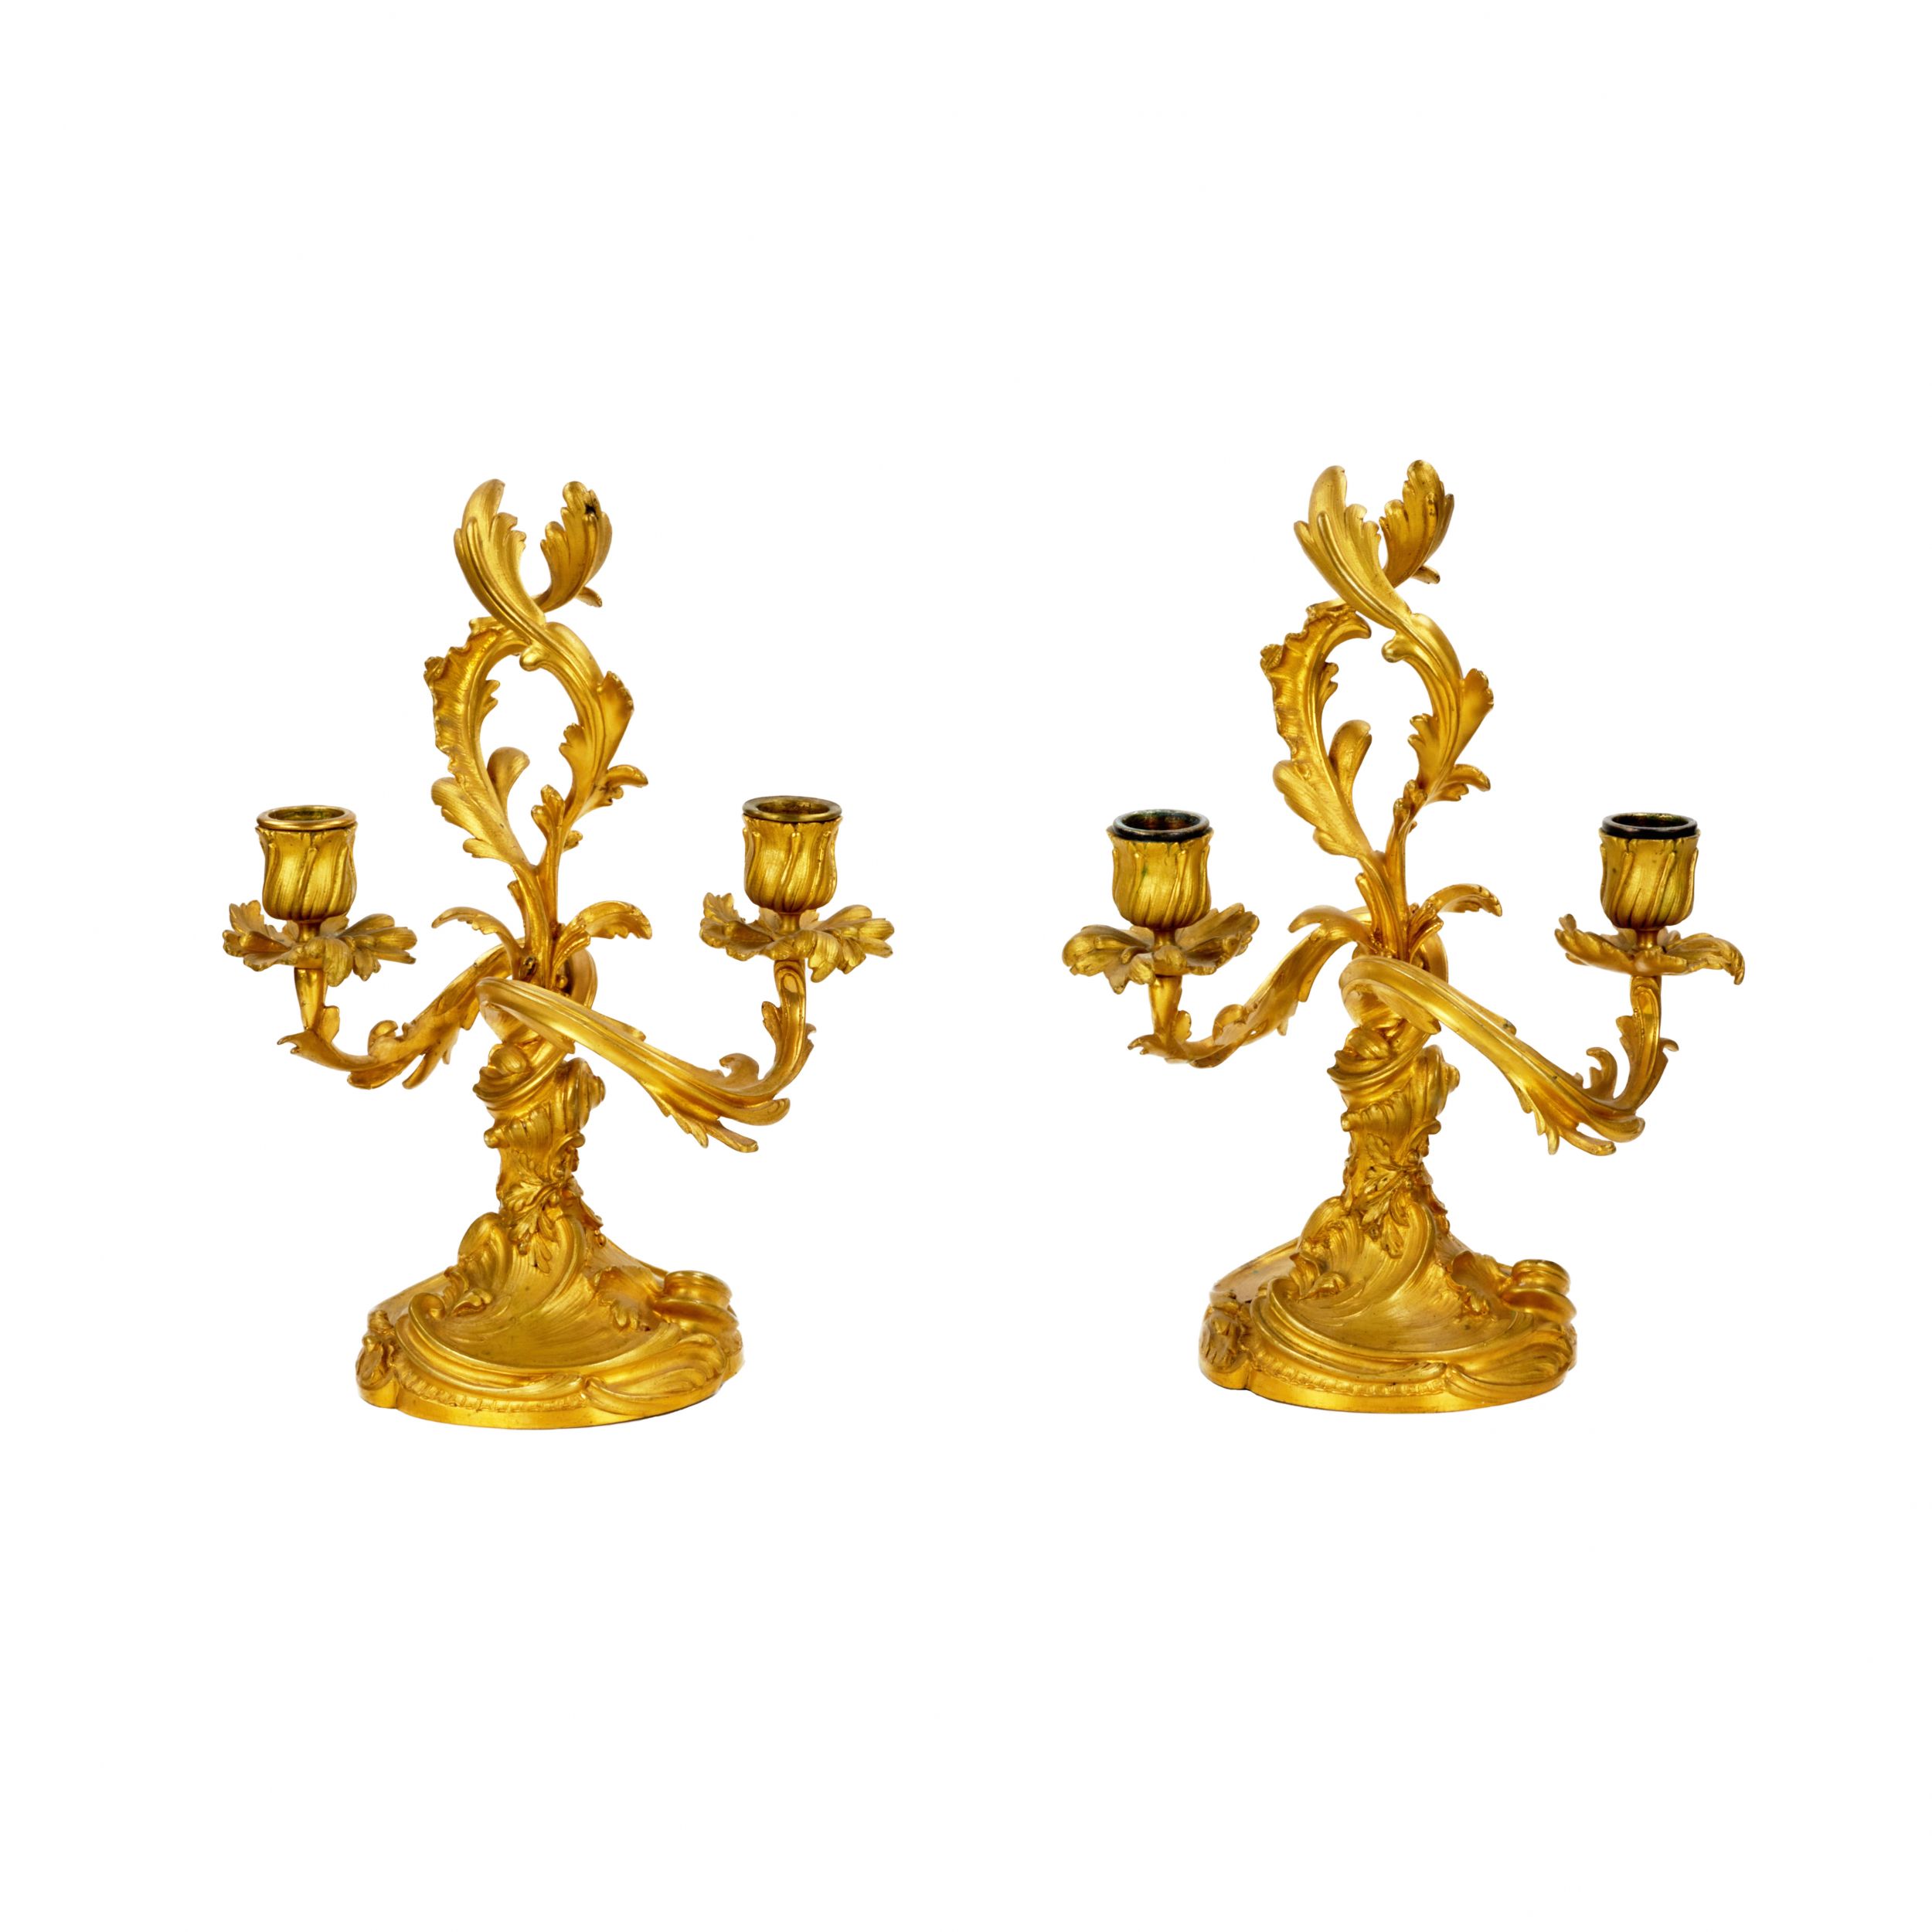 Pair-of-bronze-candlesticks-19th-century-